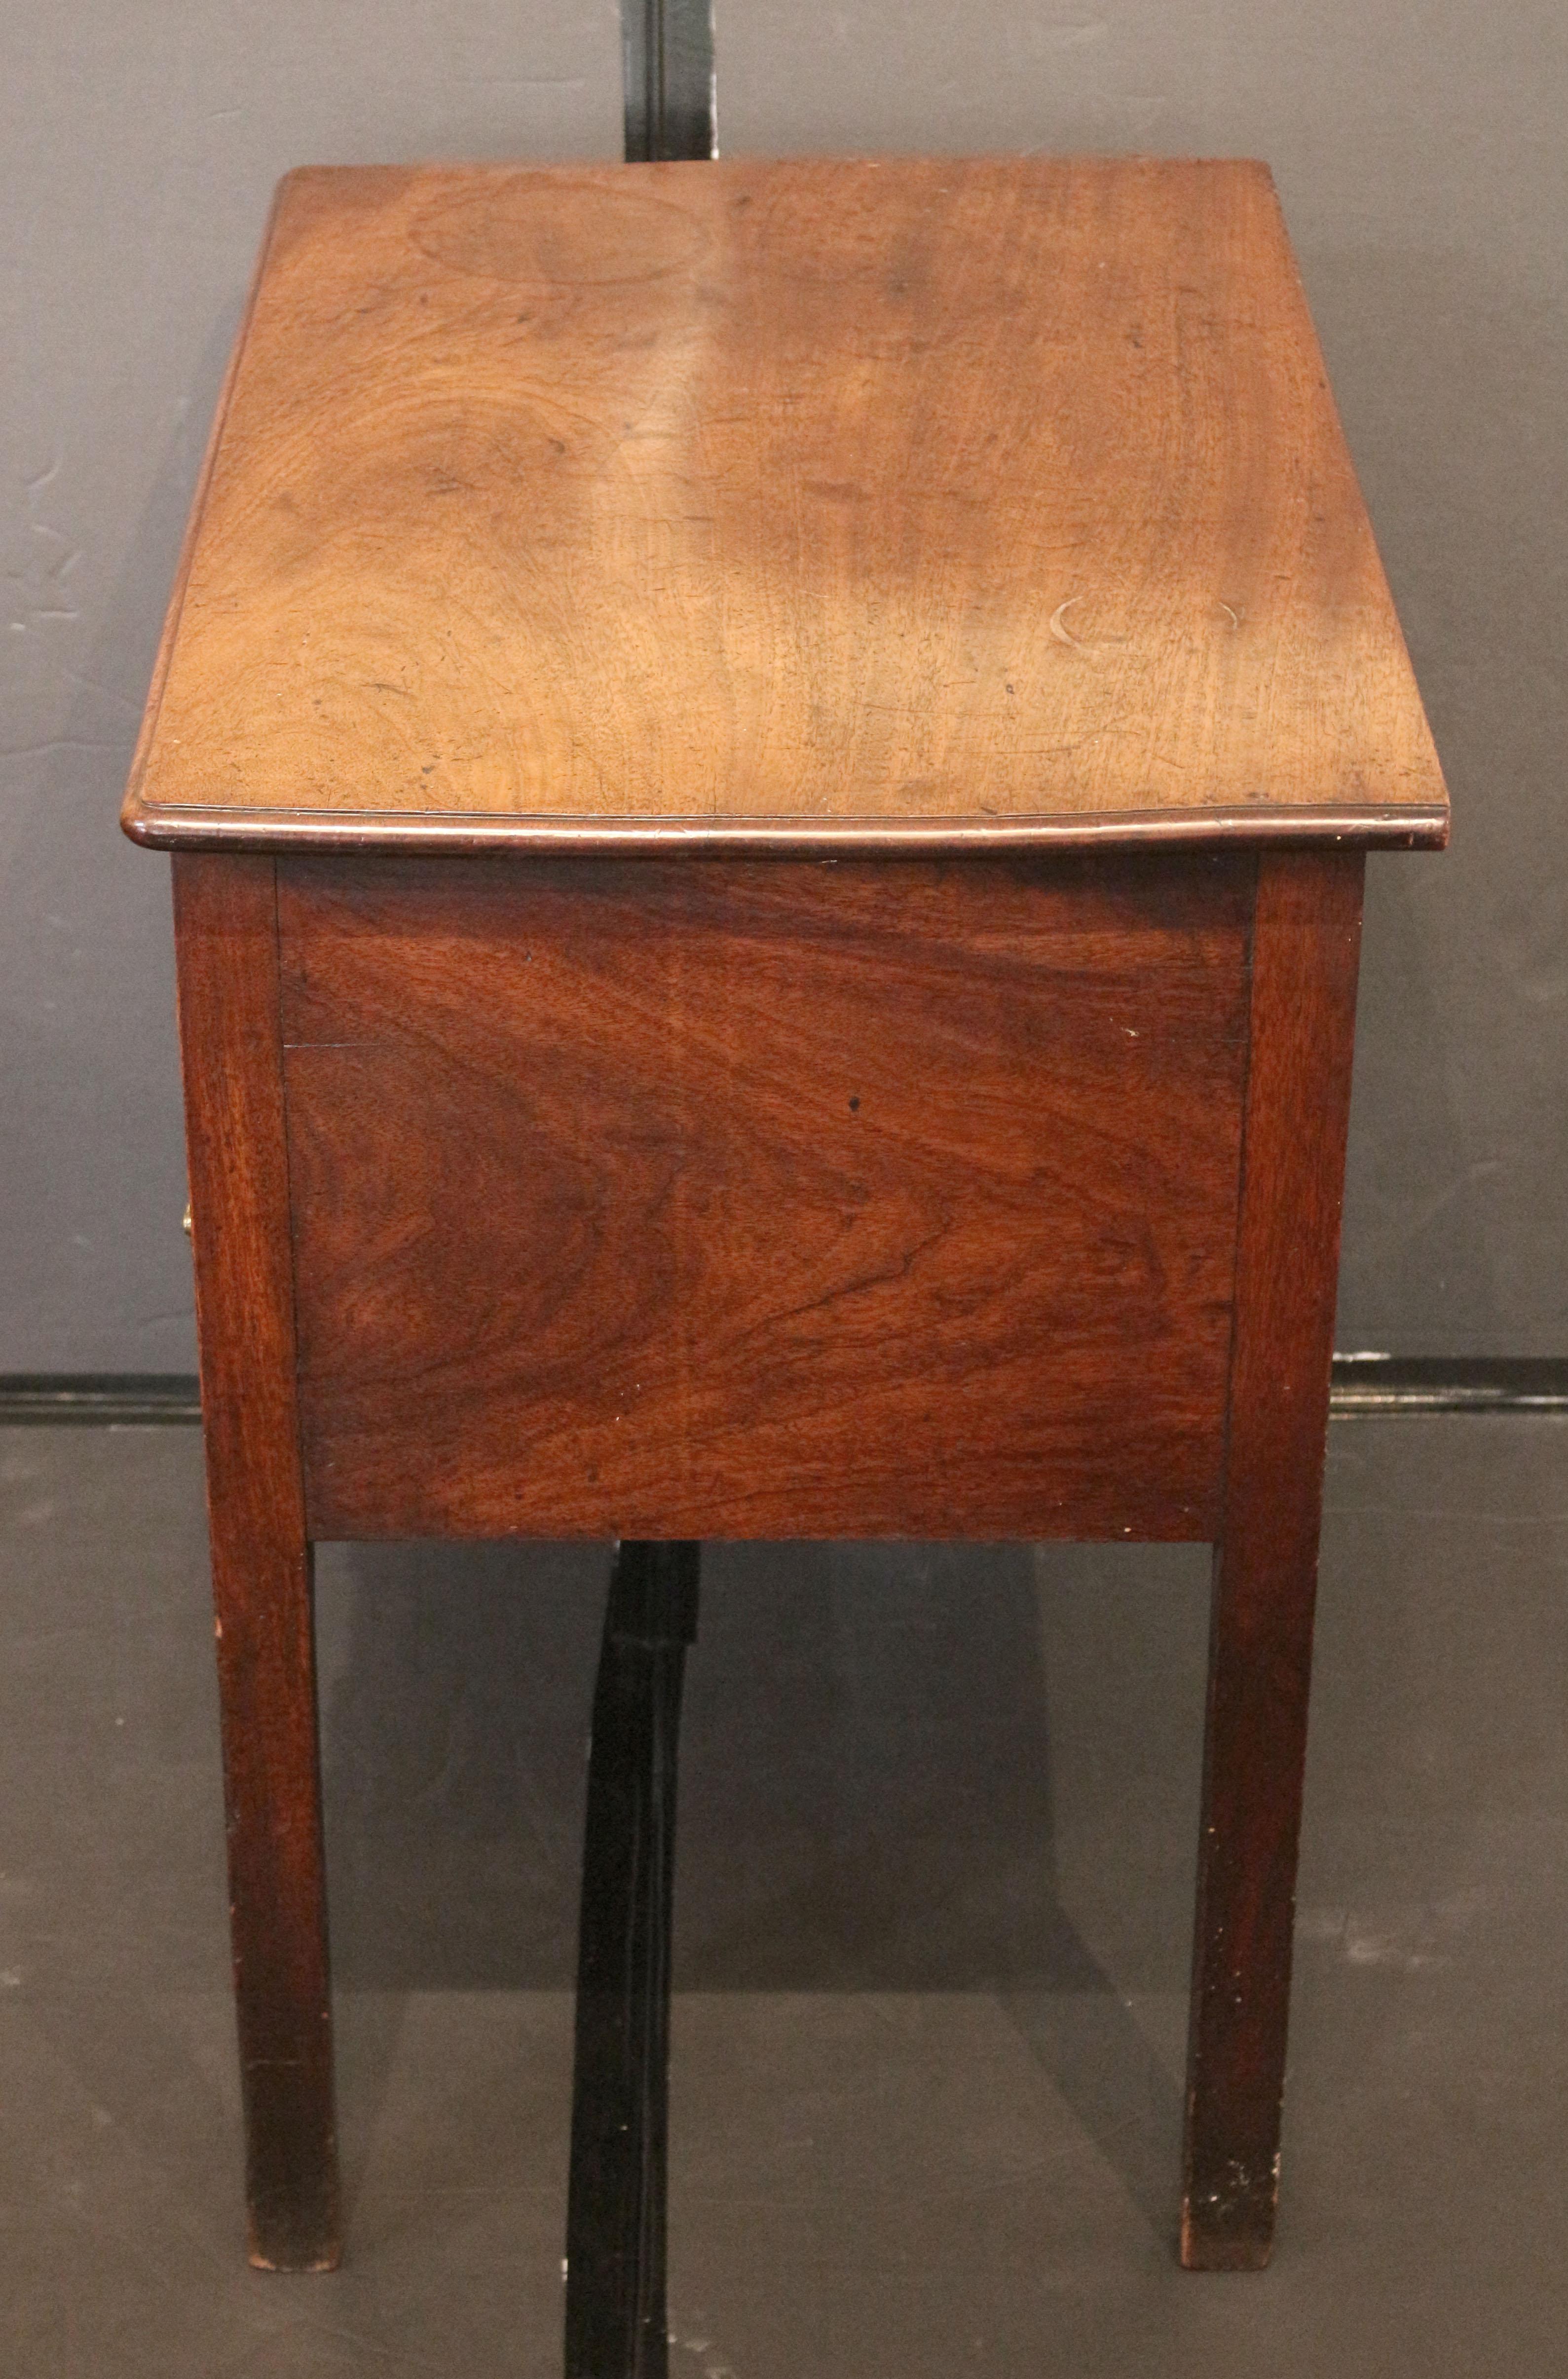 Wood Circa 1760-80 George III Period English Lowboy Table For Sale